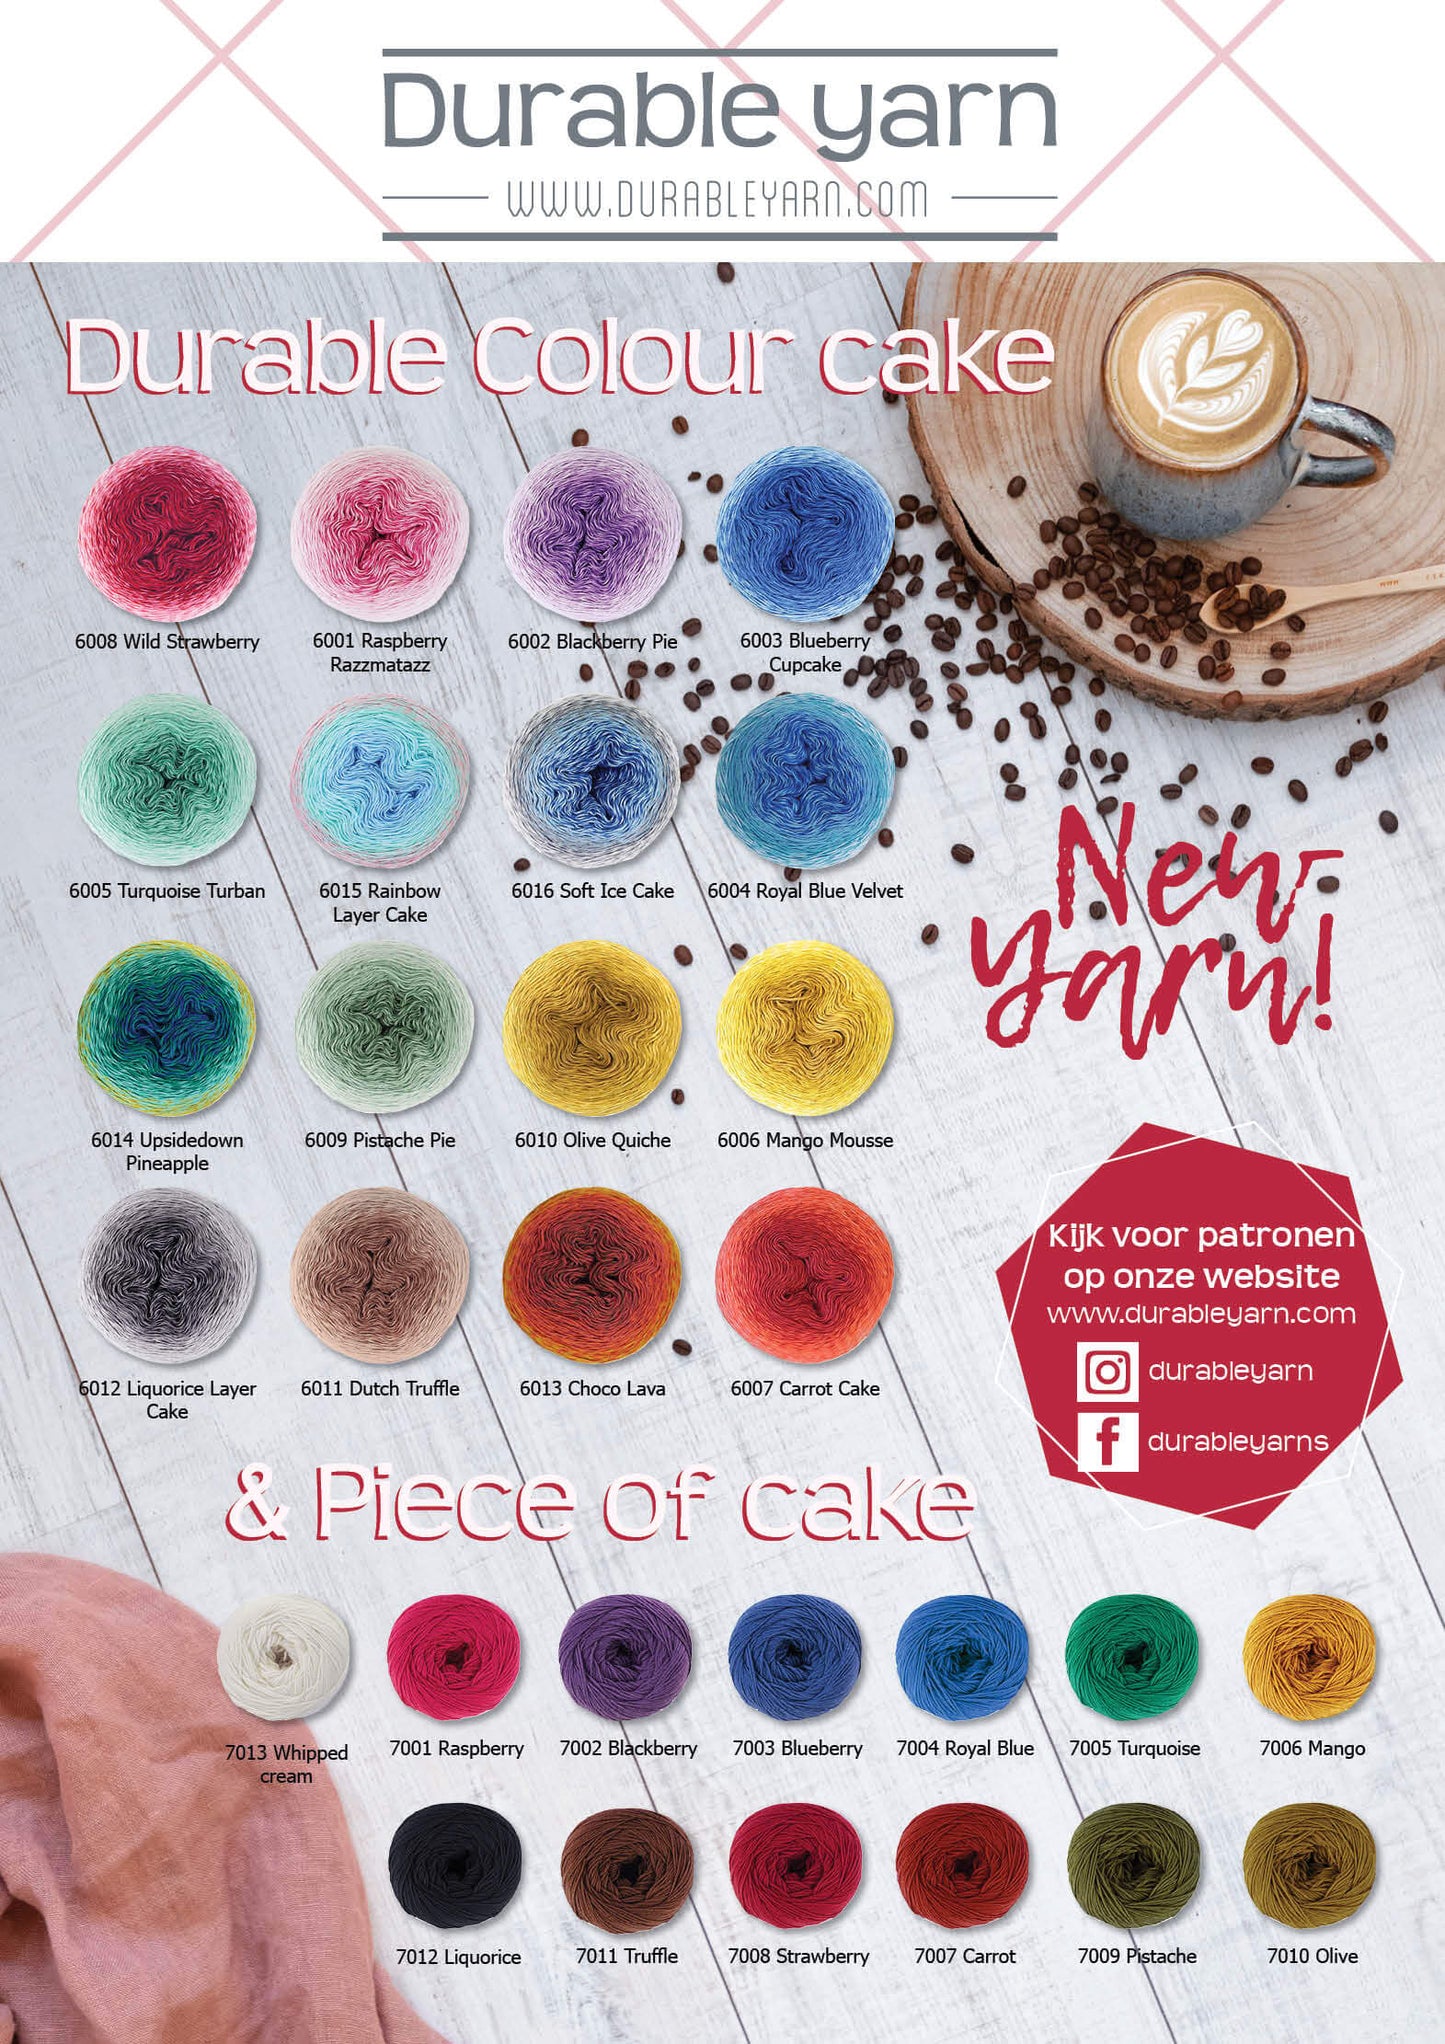 Durable Colour Cake - 6016 Soft Ice Cake